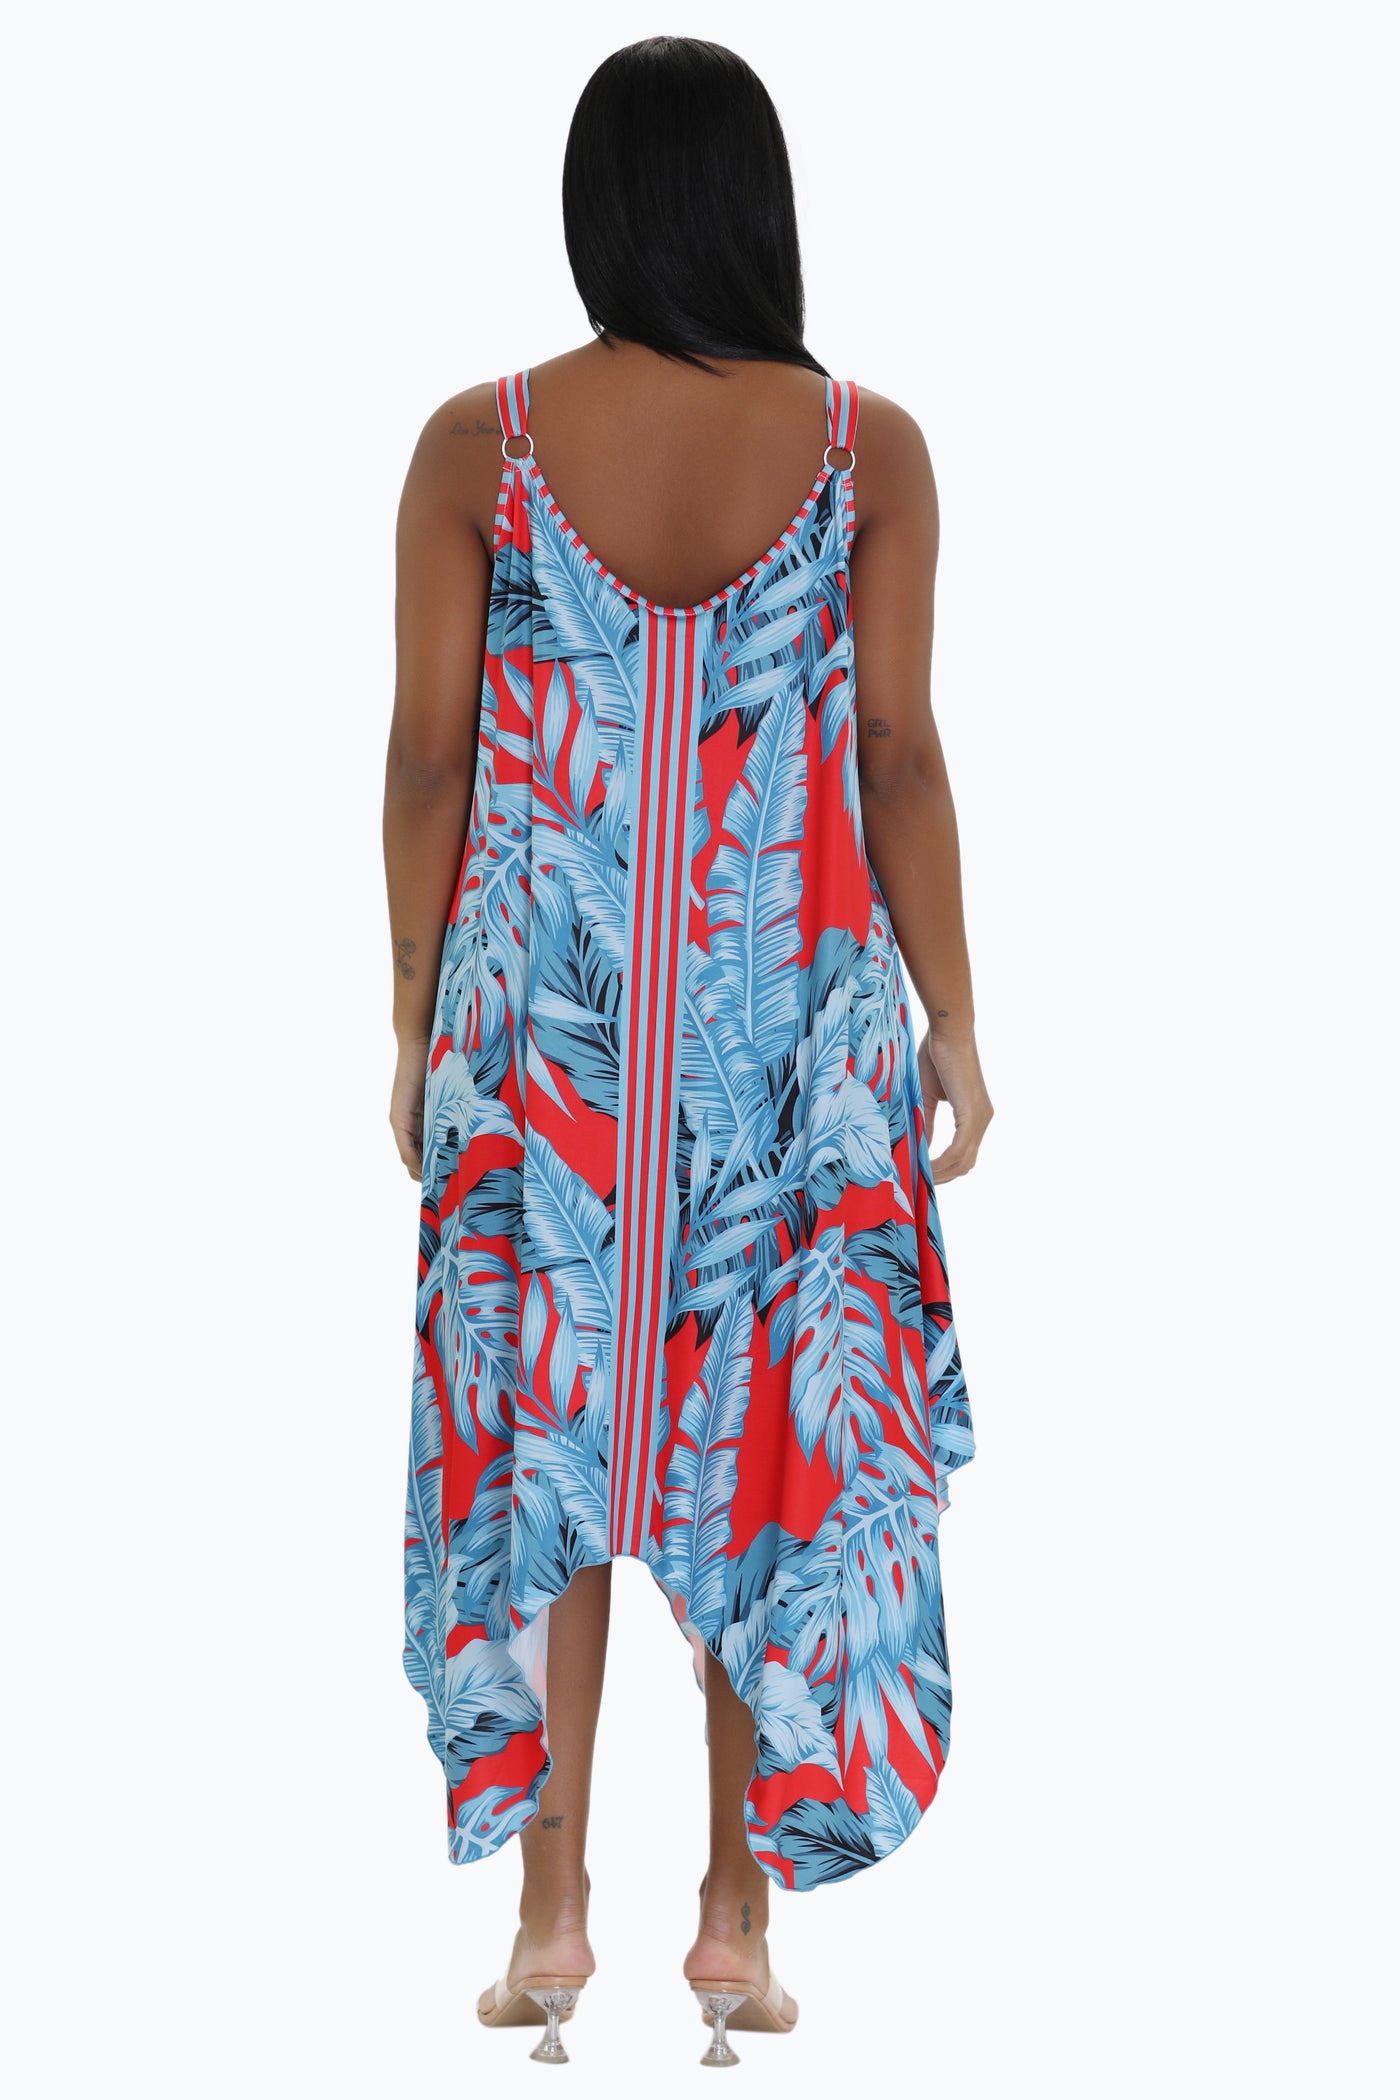 Vice City Print Beach Dress 21243 - Advance Apparels Inc